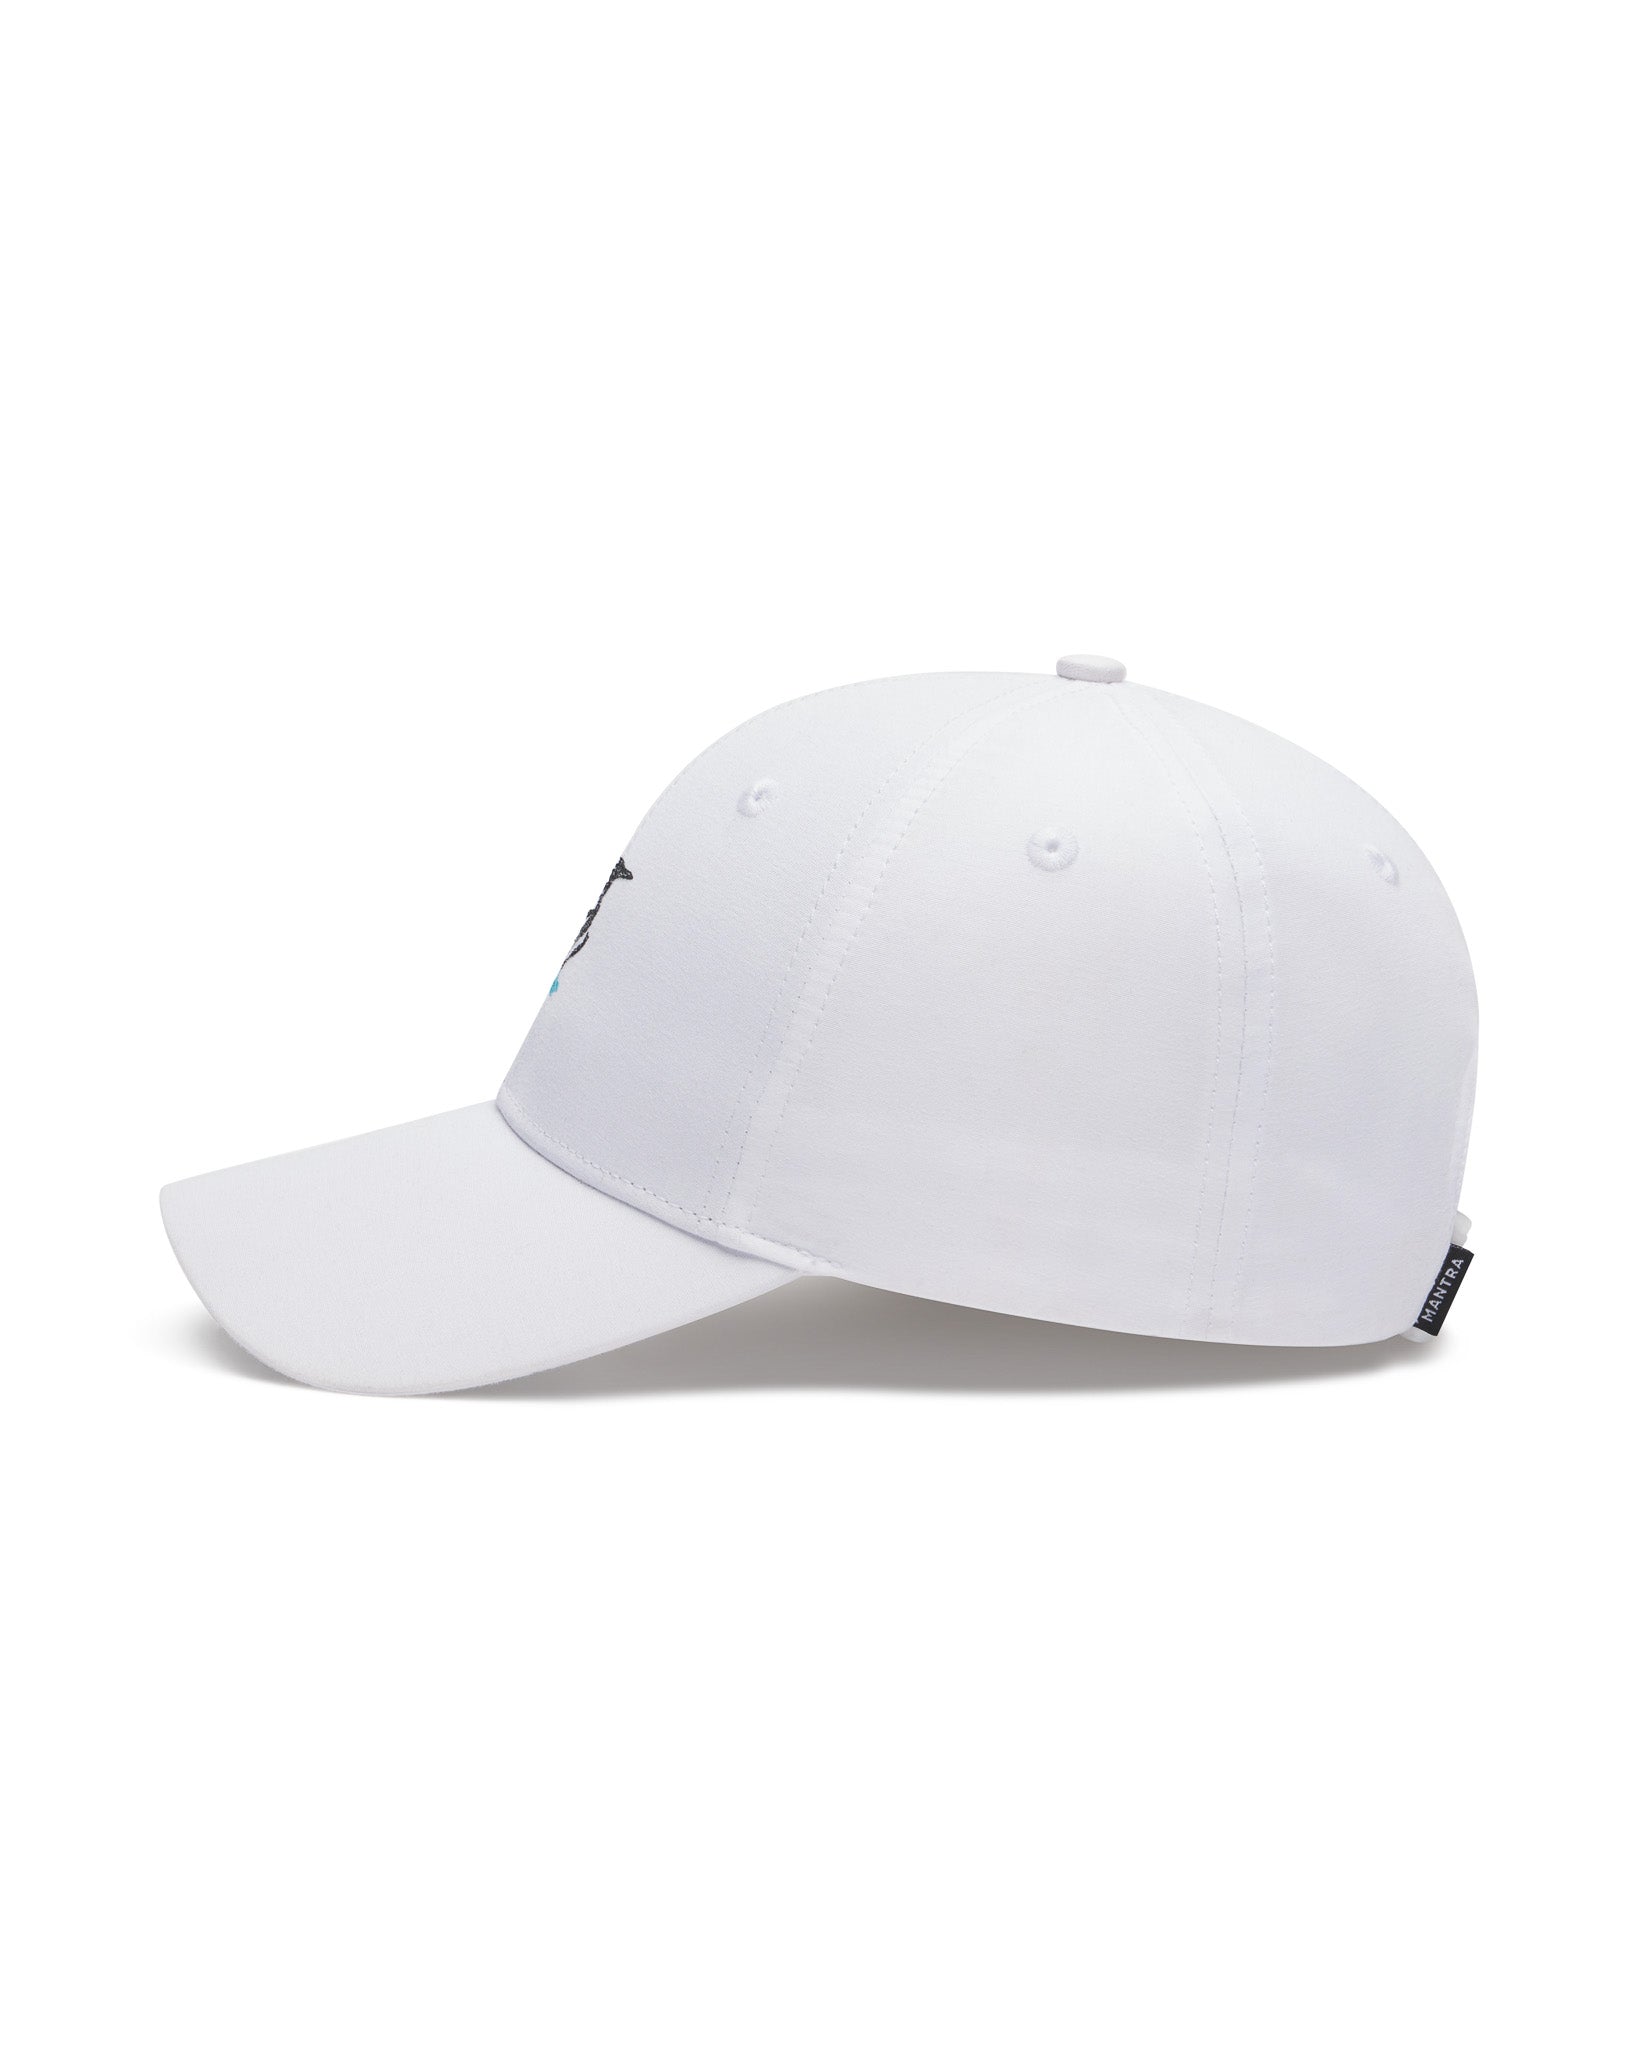 REO Headwear Ventilator White Wide Brim S - M Shaped Cricket Umpire Hat